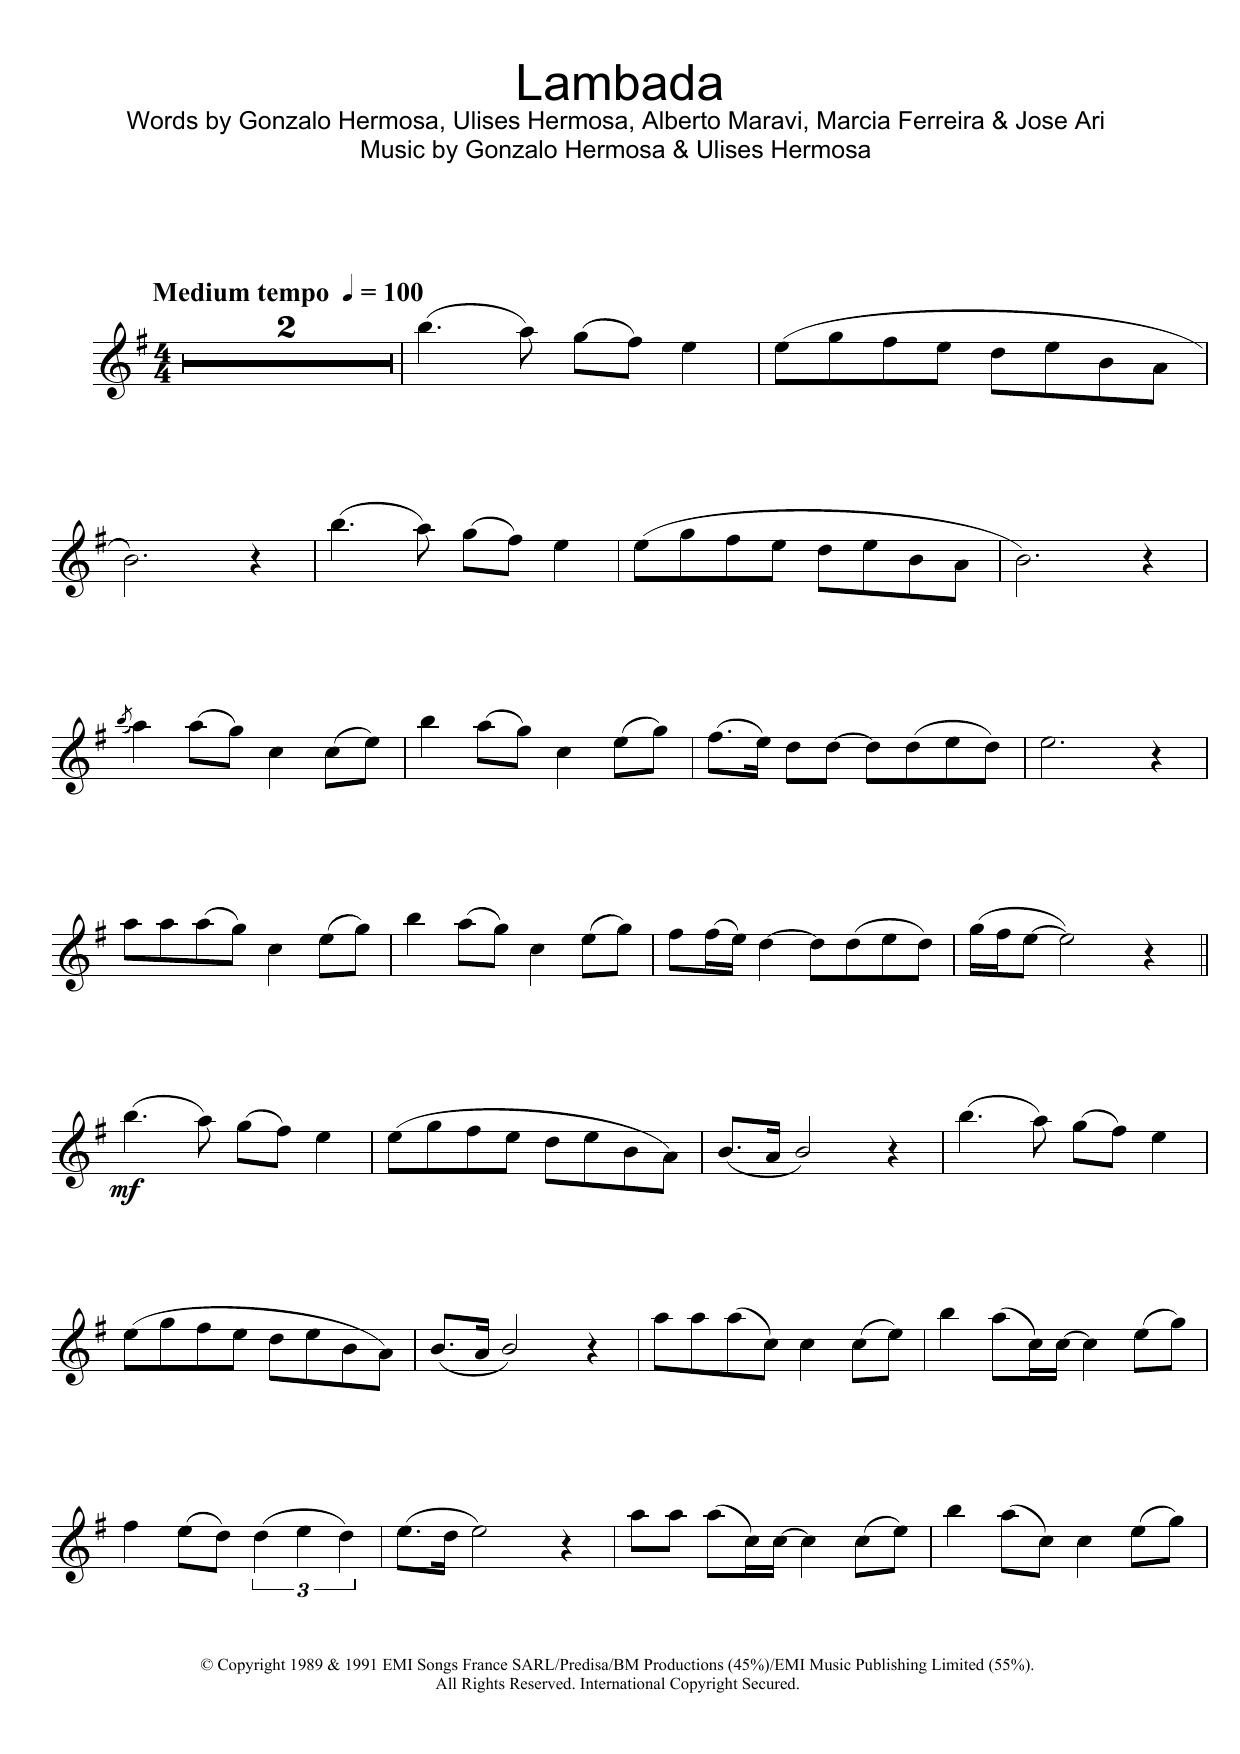 Kaoma Lambada Sheet Music Notes & Chords for Alto Saxophone - Download or Print PDF